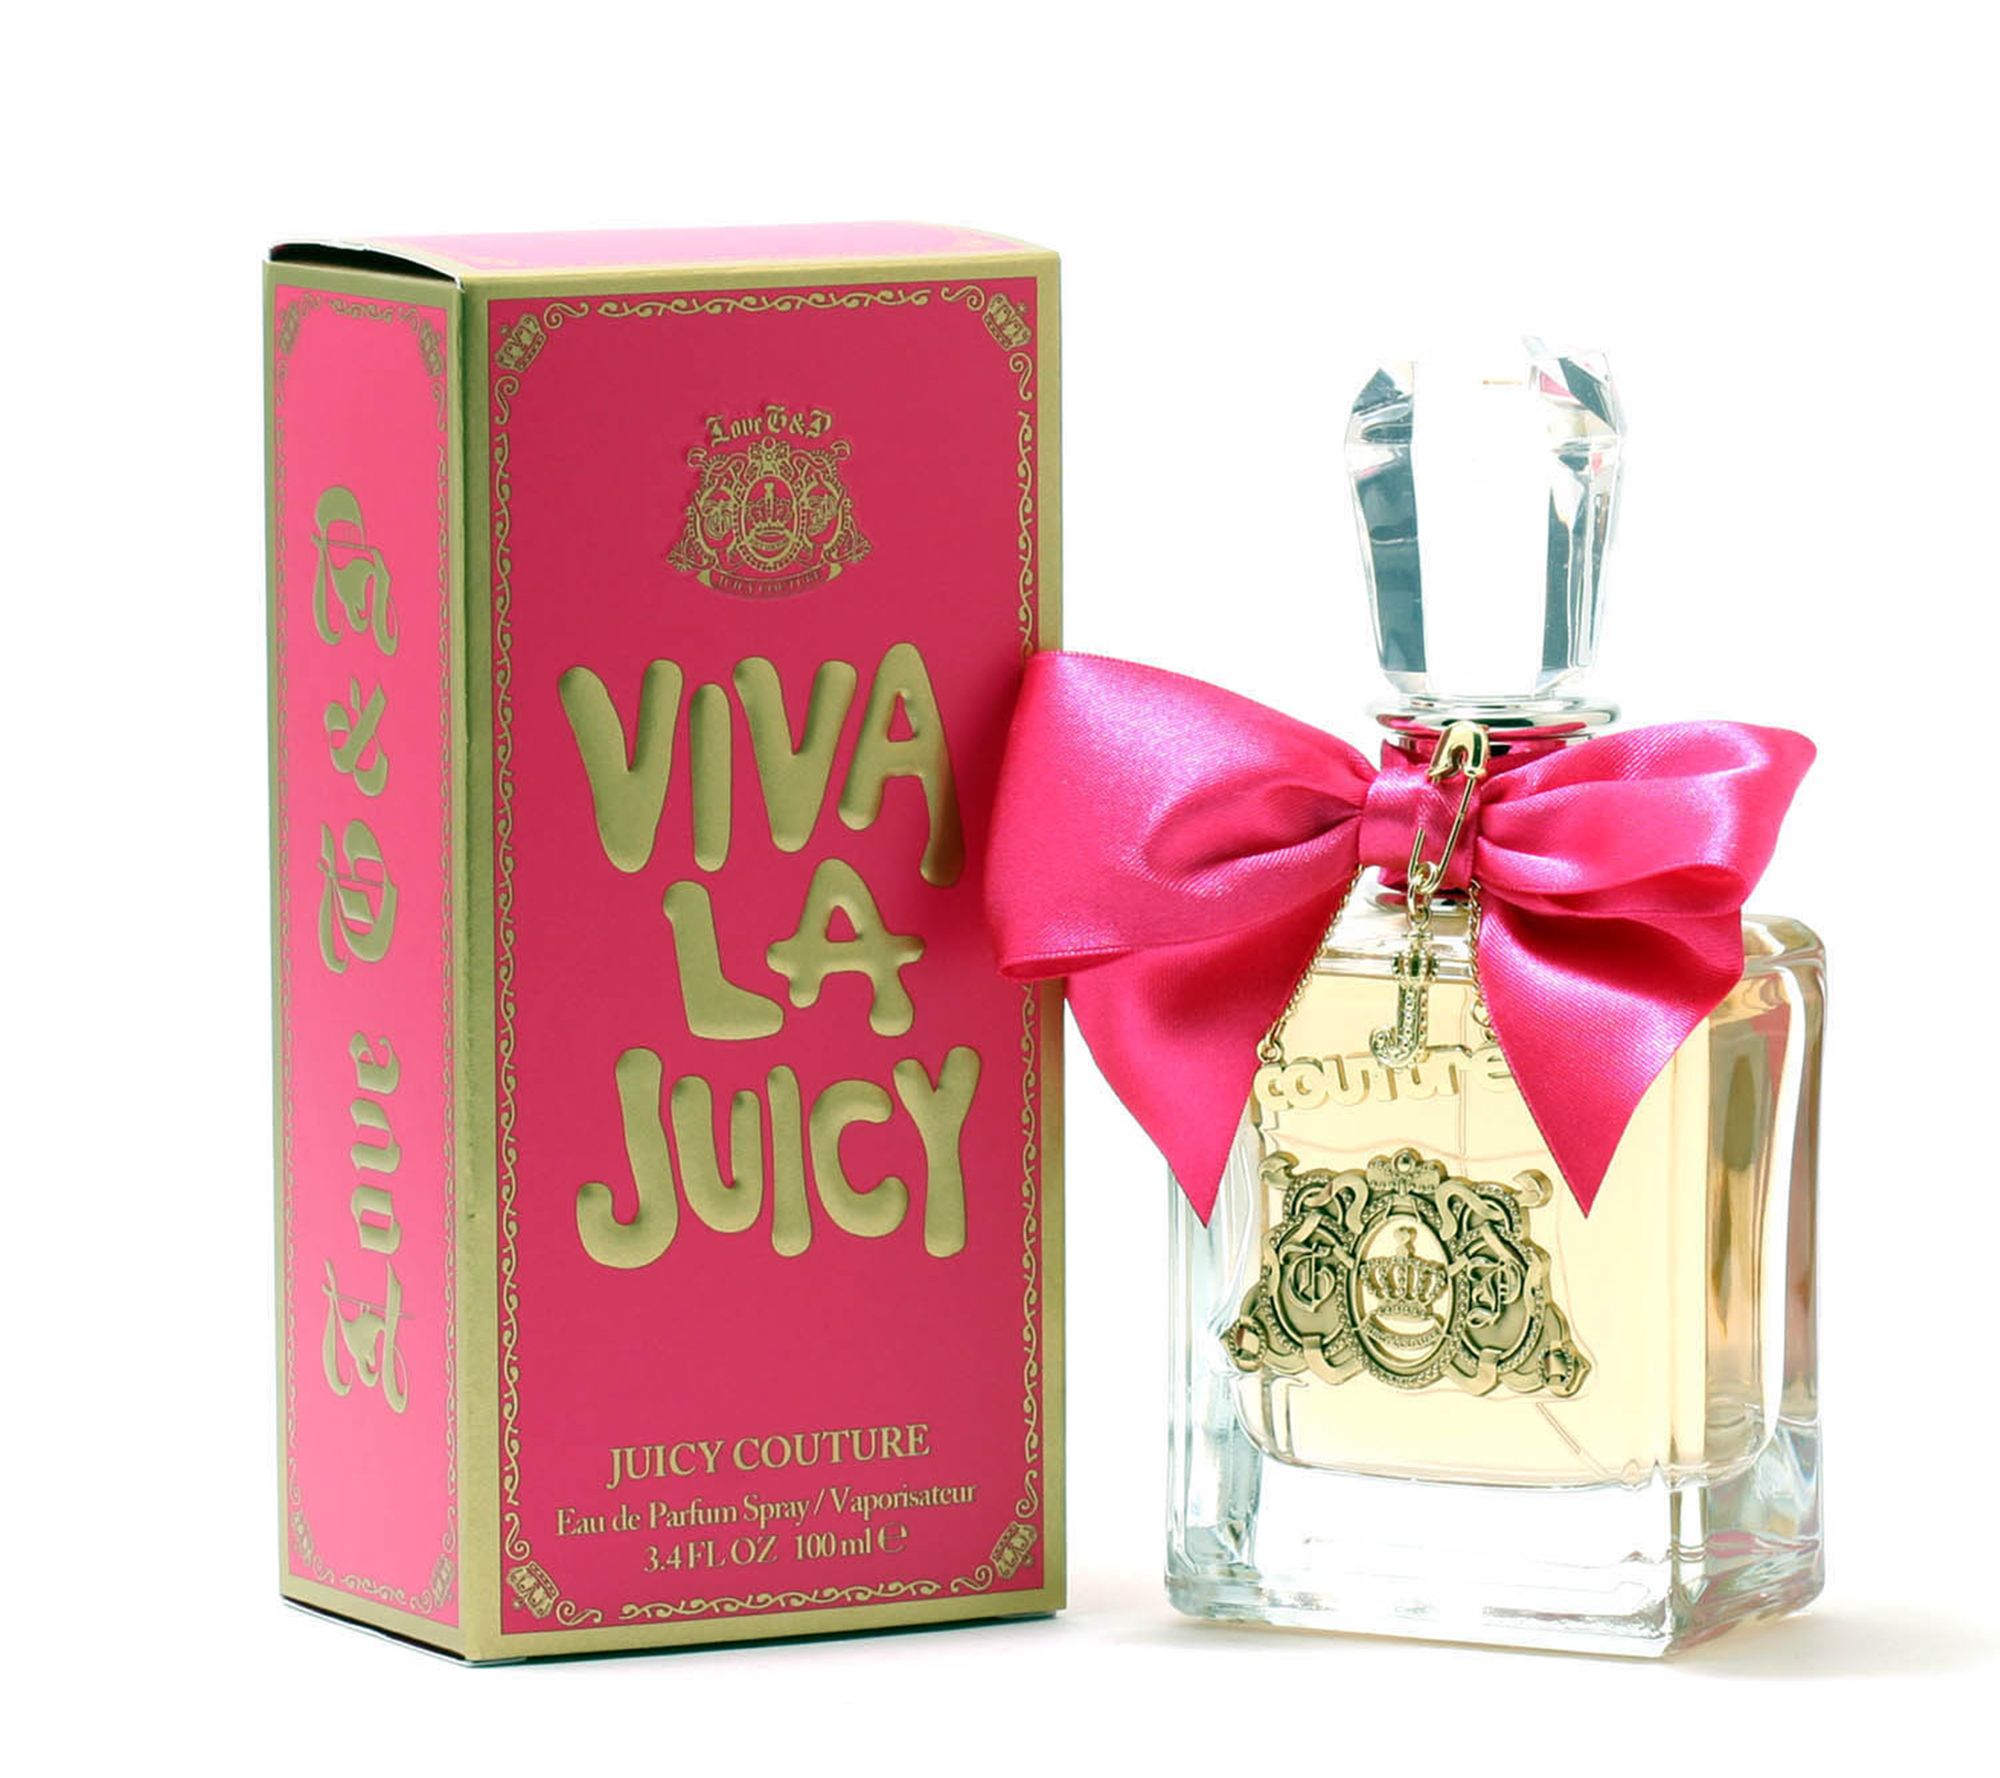 Juicy Couture Viva La Juicy Ladies Eau De Parfum, 3.4-fl oz 